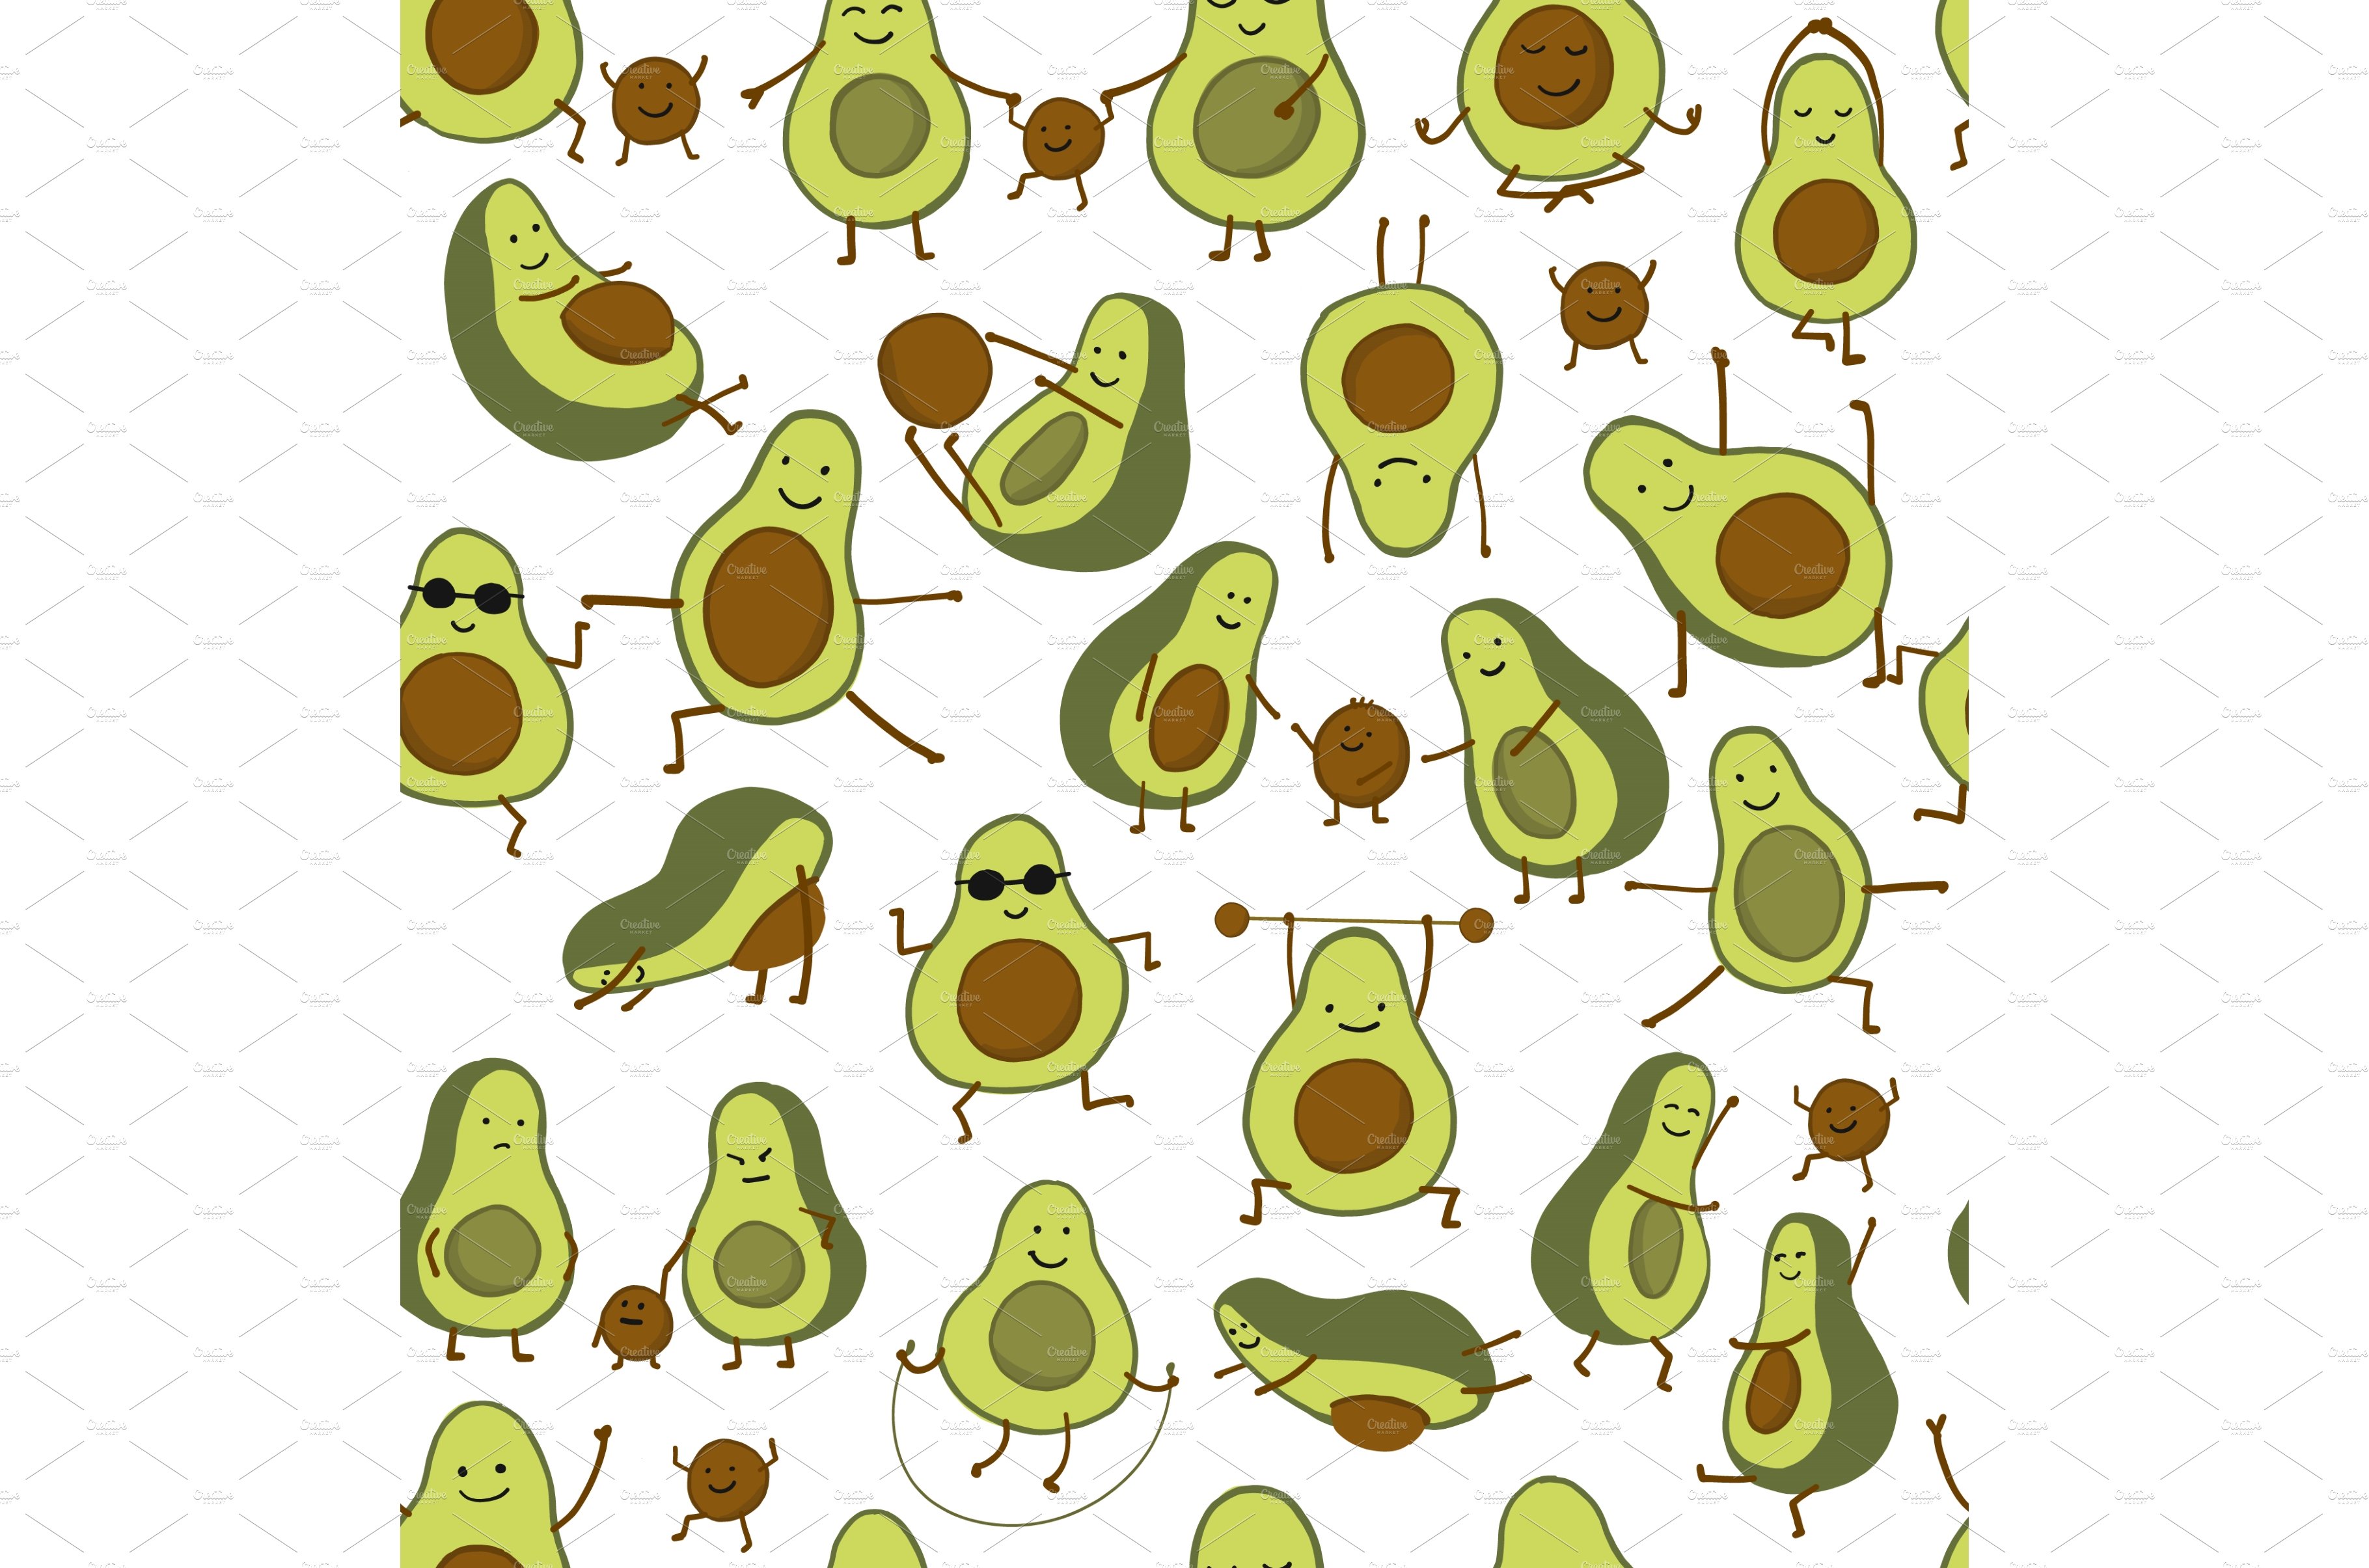 Funny Avocado cartoon characters cover image.